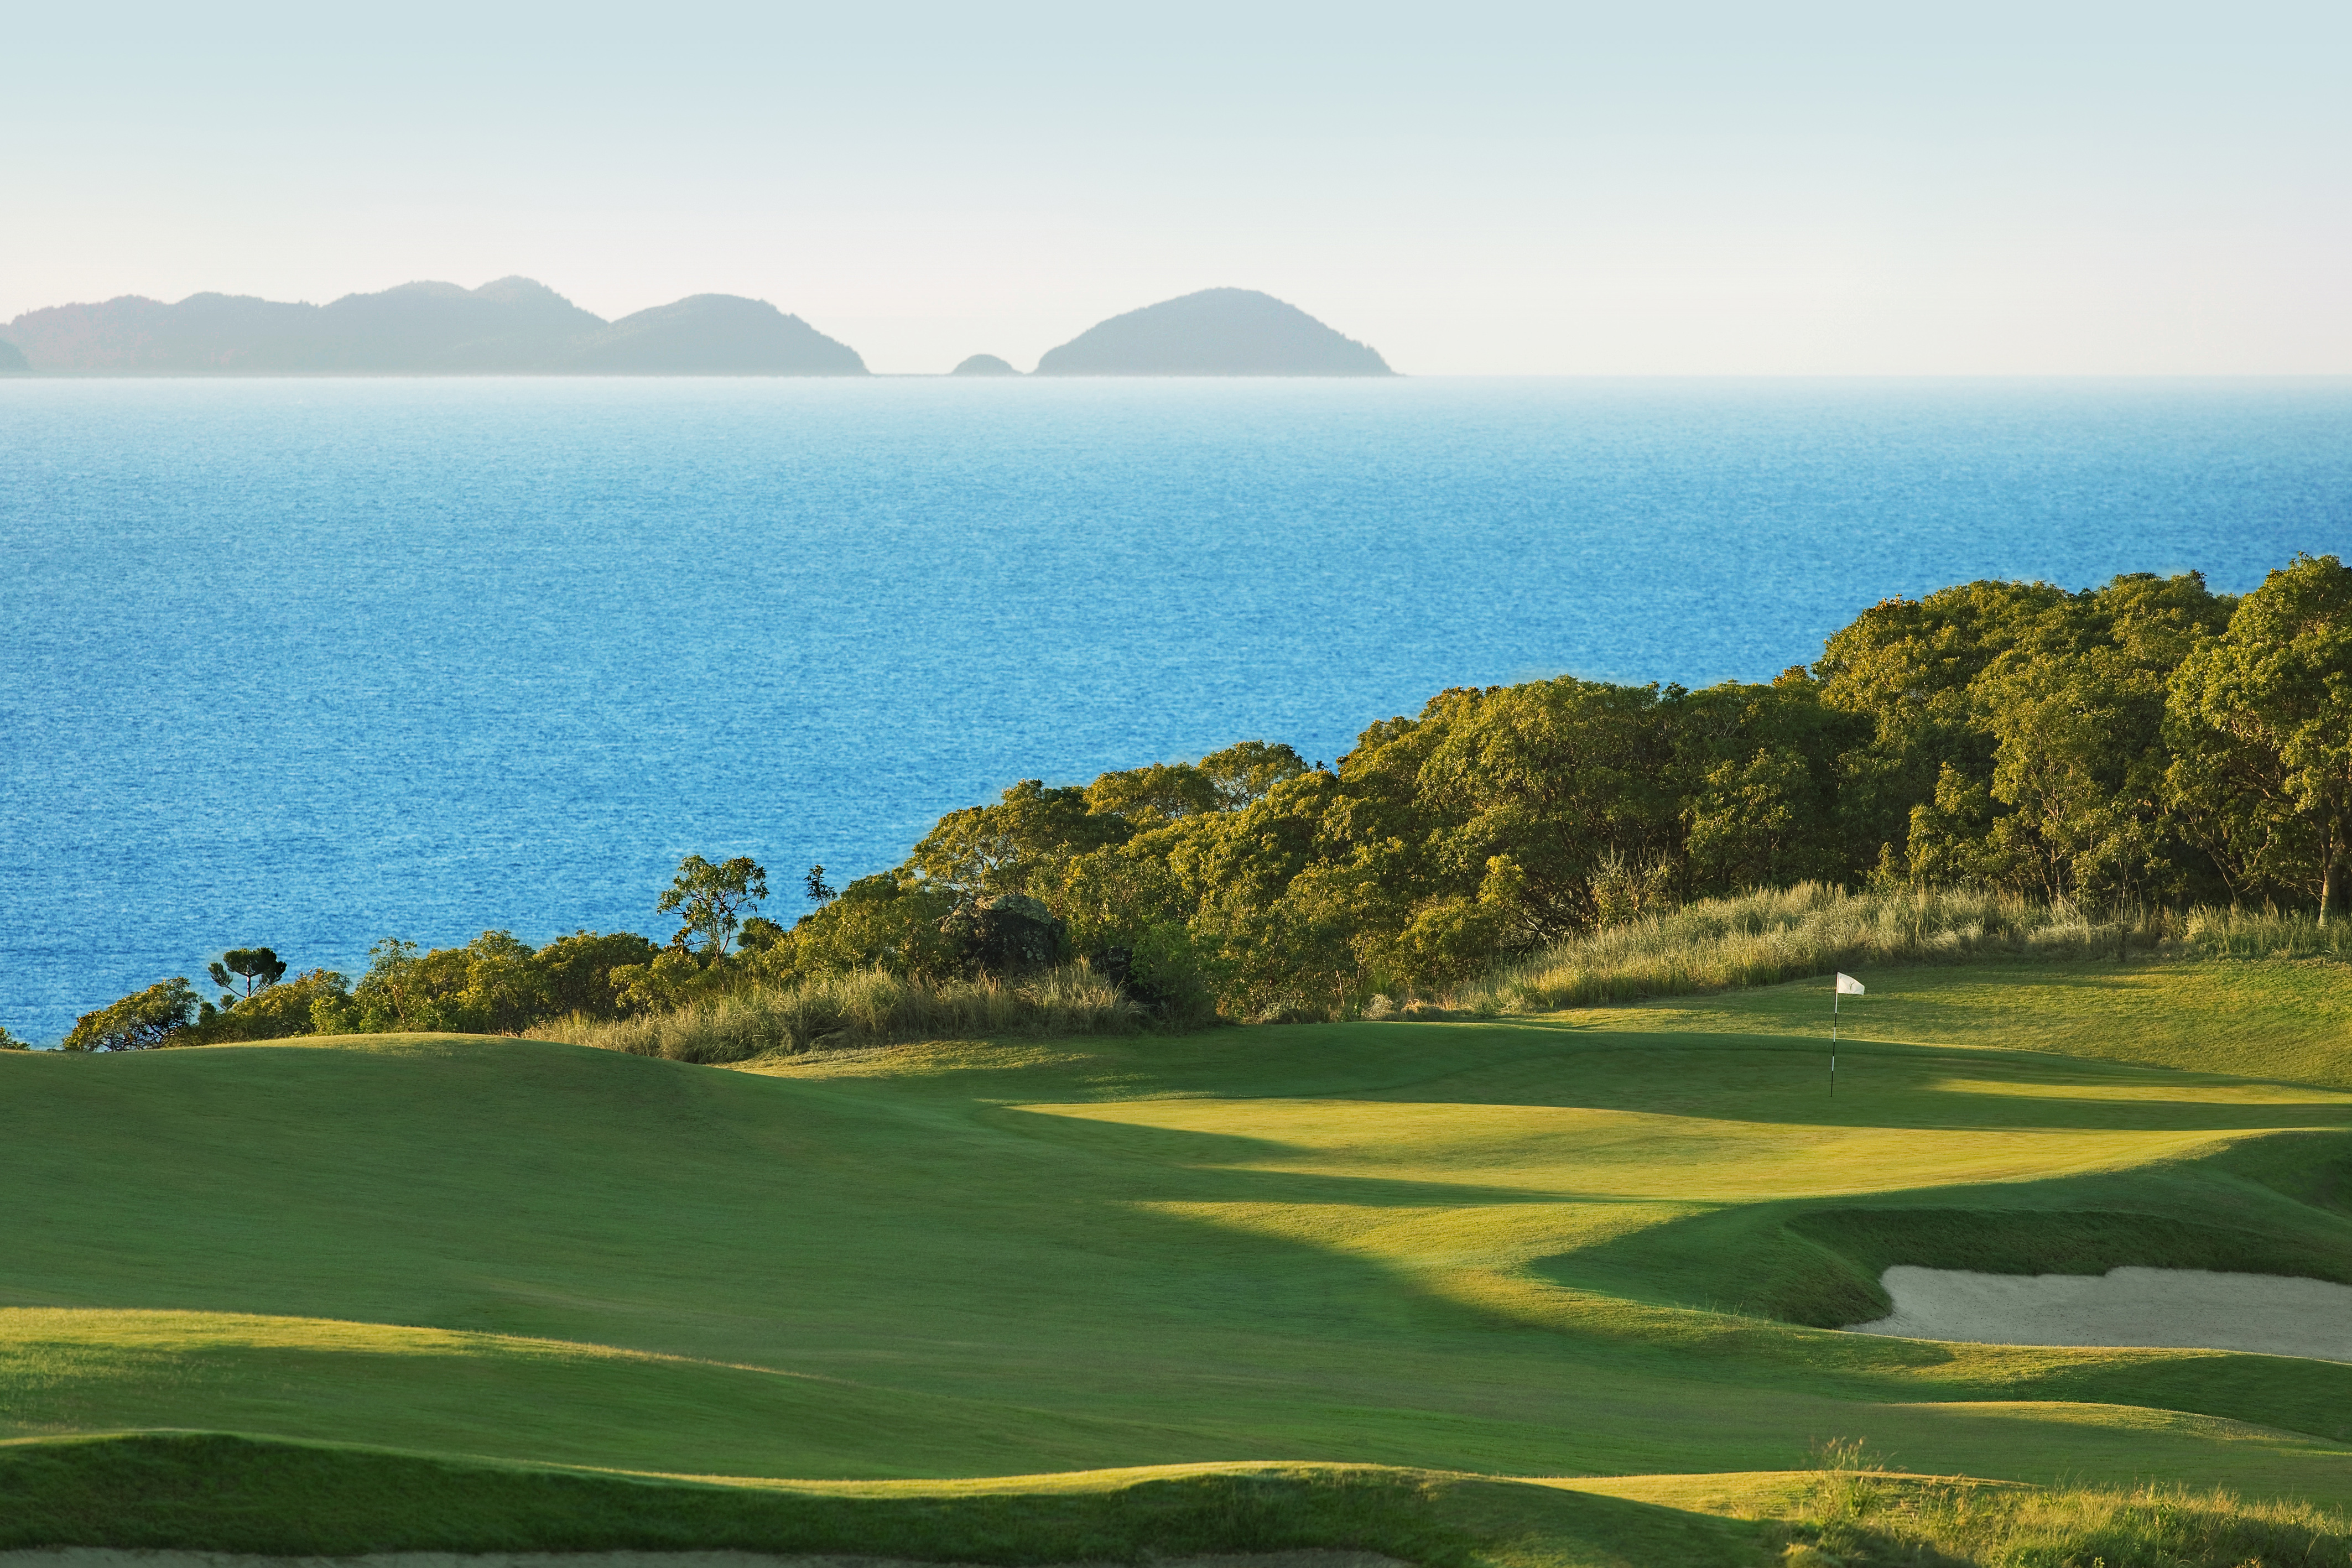 qualia_Hamilton-Island_Golf-Course-15th-hole-sunrise - Click to view larger version